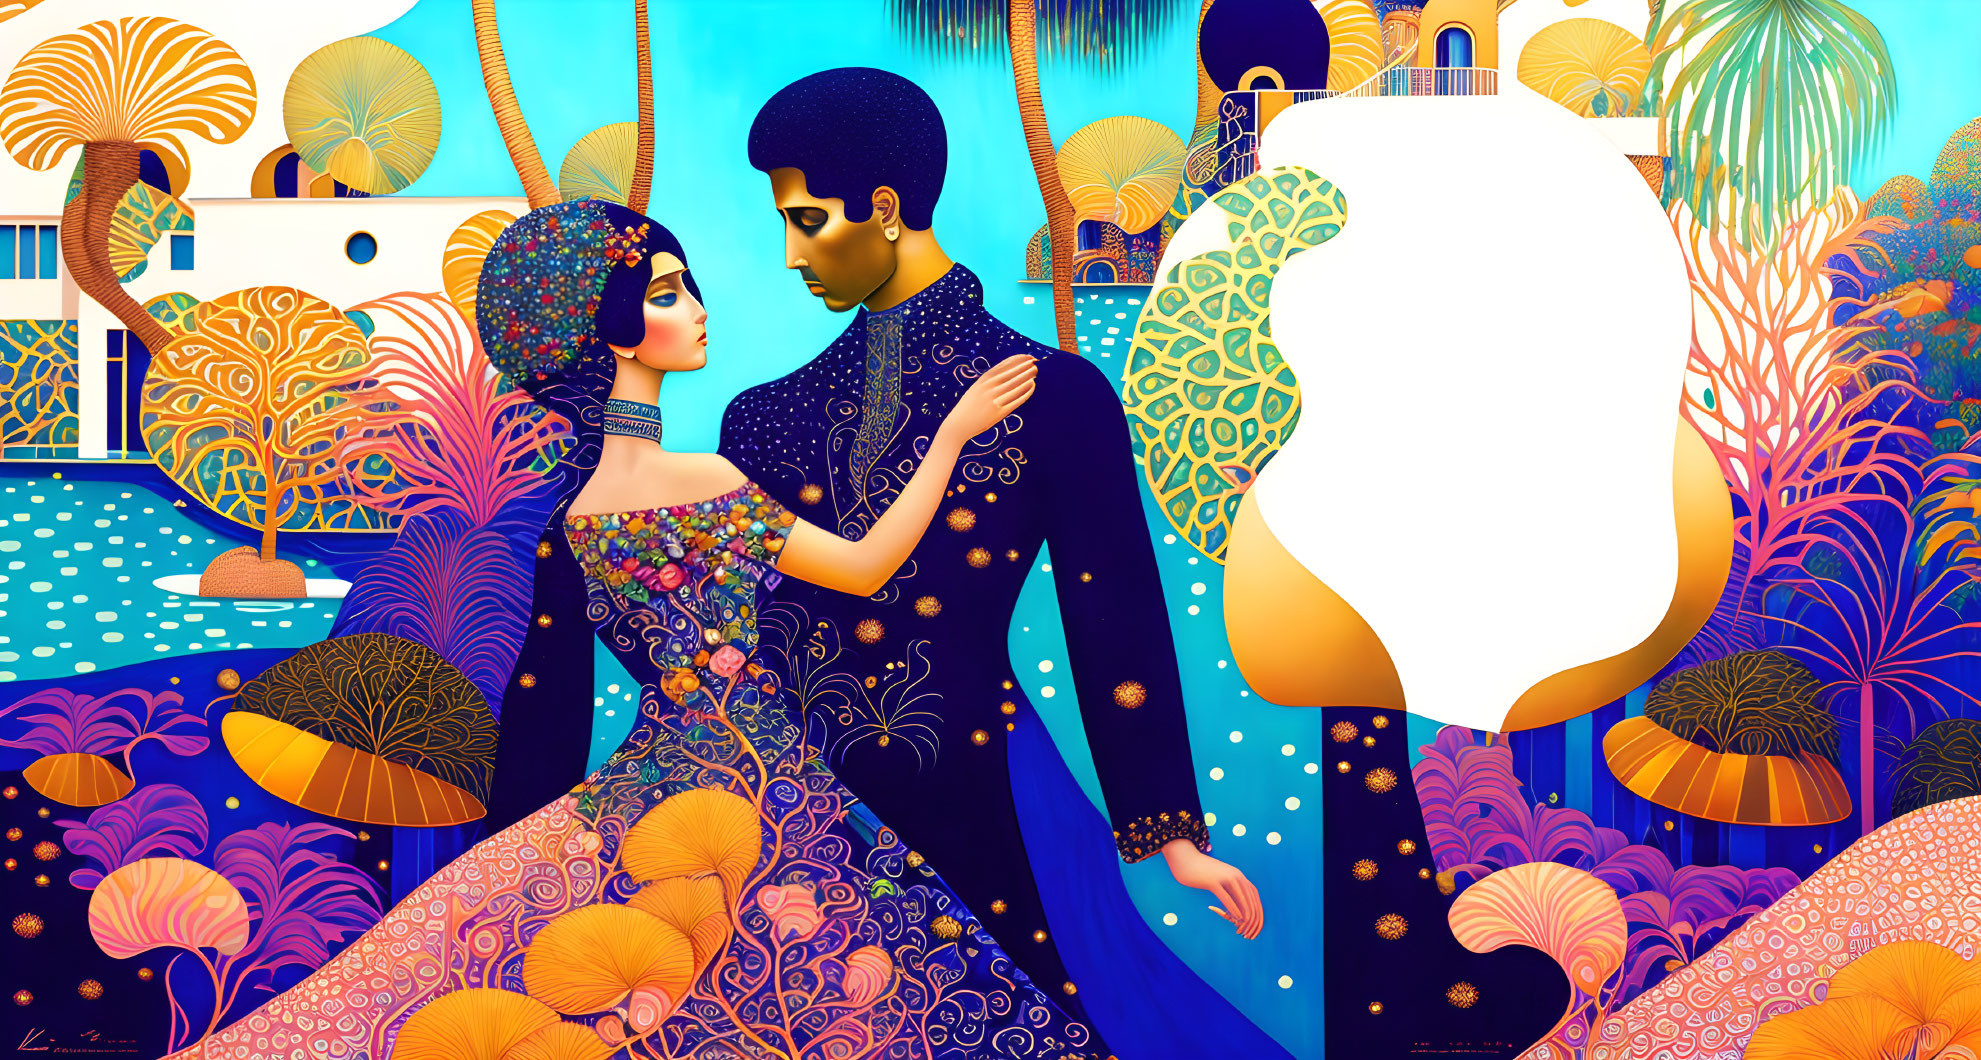 Colorful illustration: Couple embracing in fantastical garden